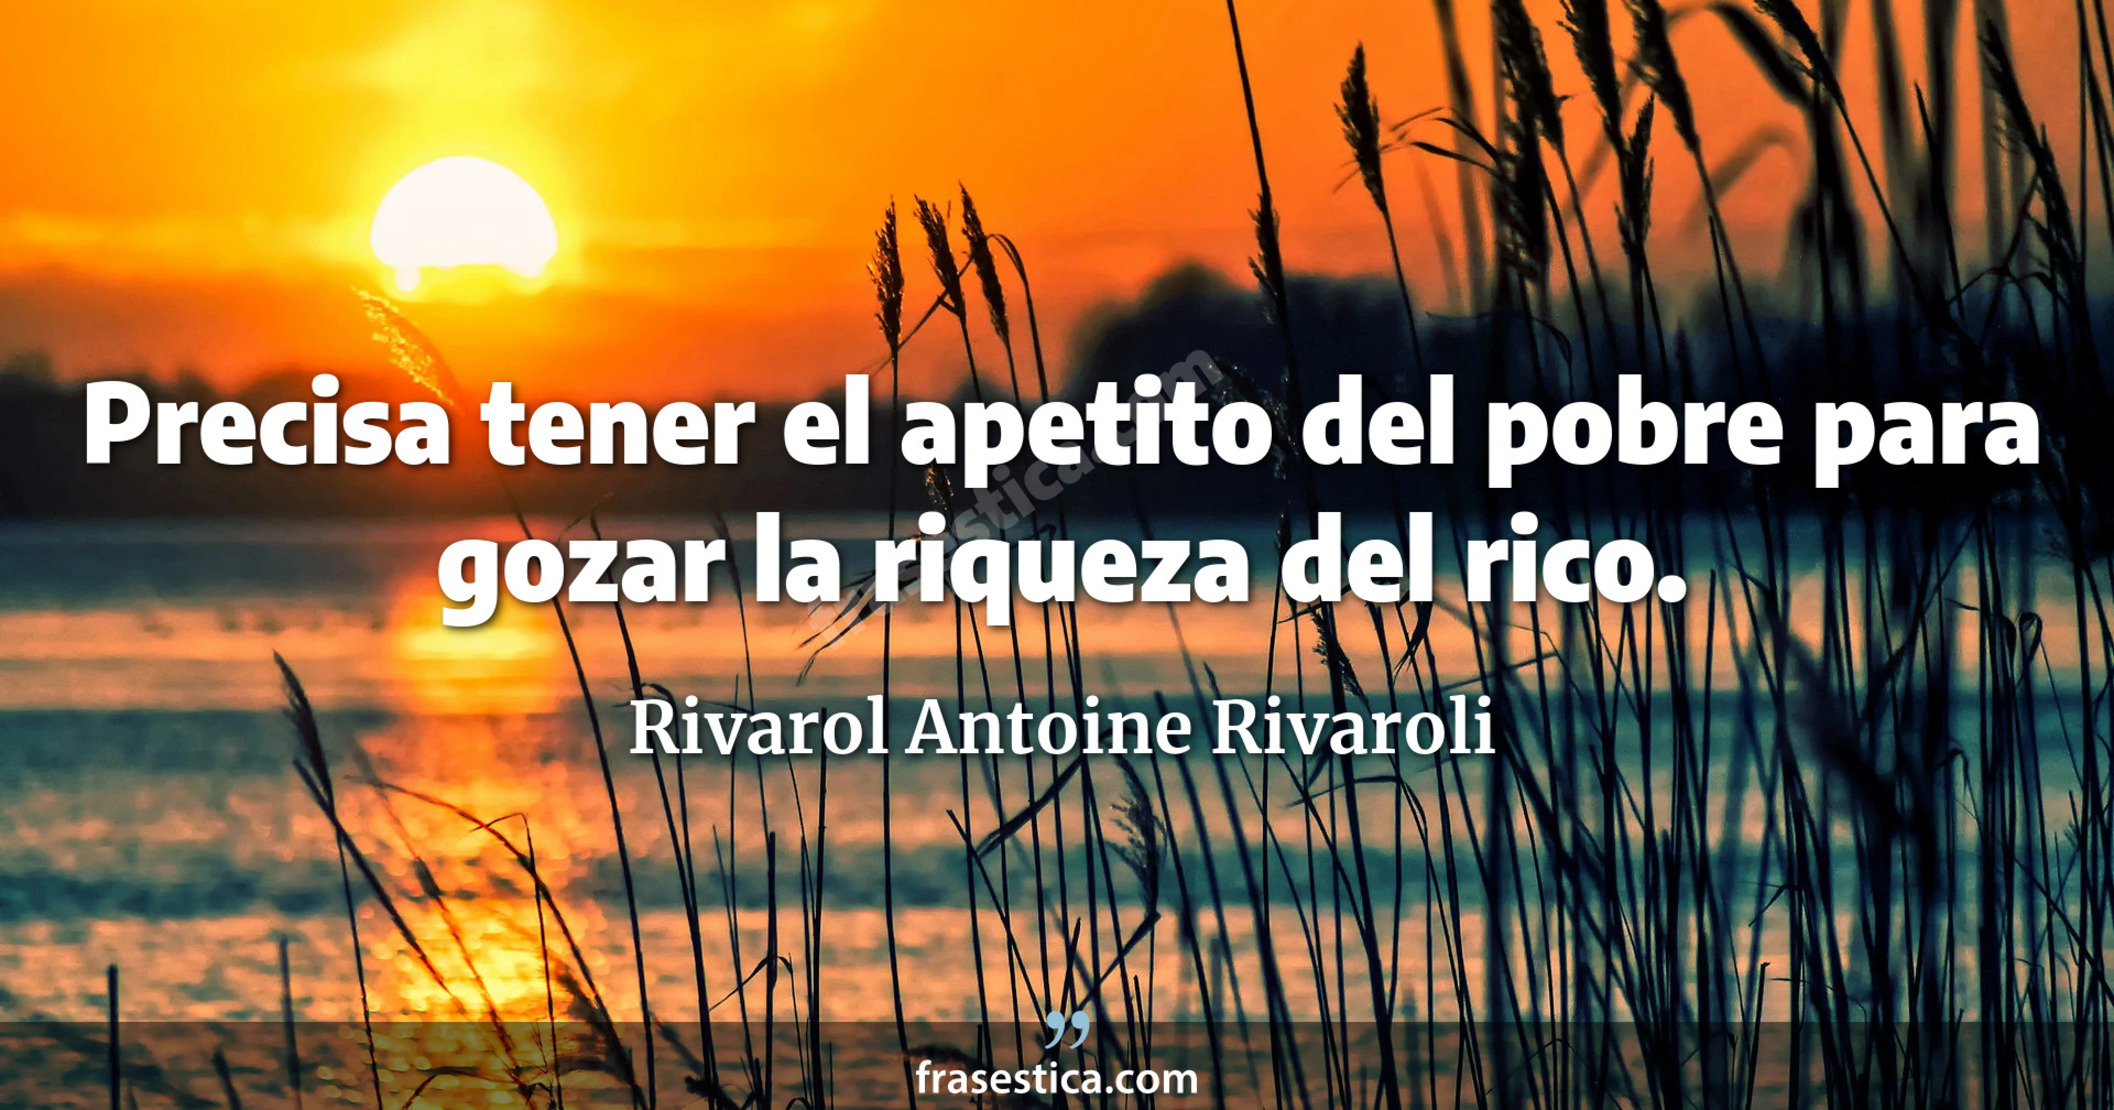 Precisa tener el apetito del pobre para gozar la riqueza del rico. - Rivarol Antoine Rivaroli